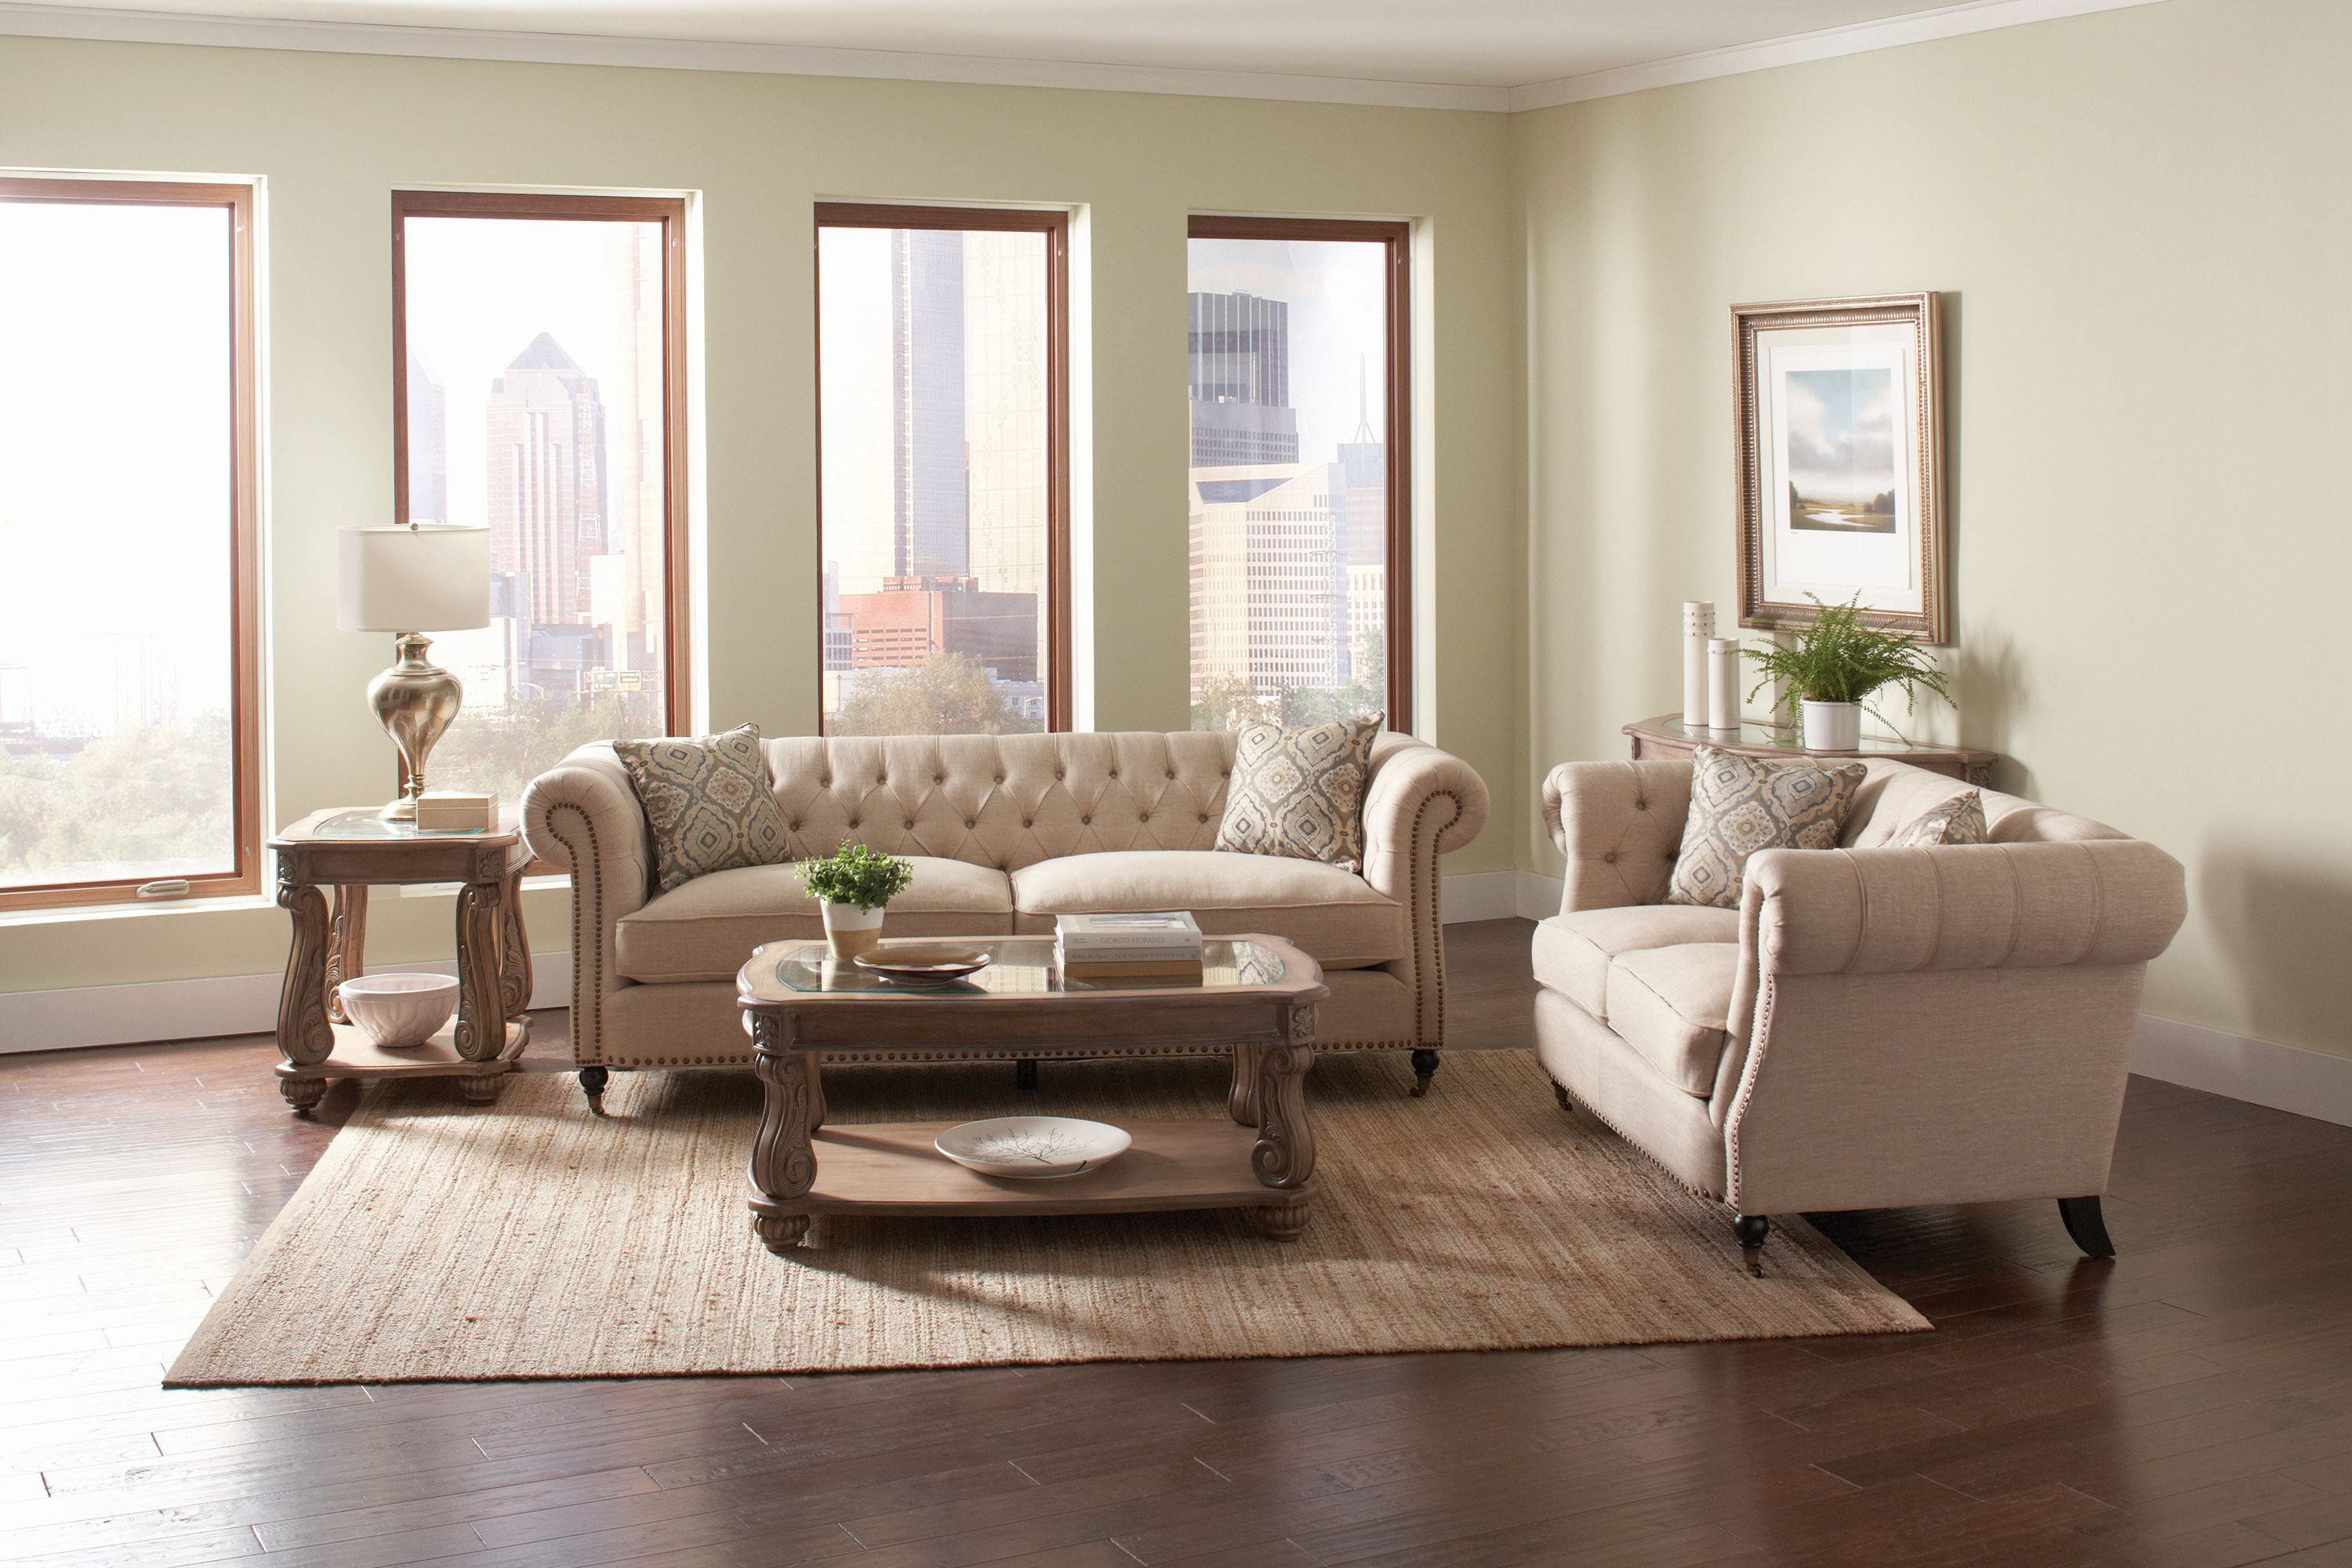 Traditional Living Room Furniture Sets For Sale